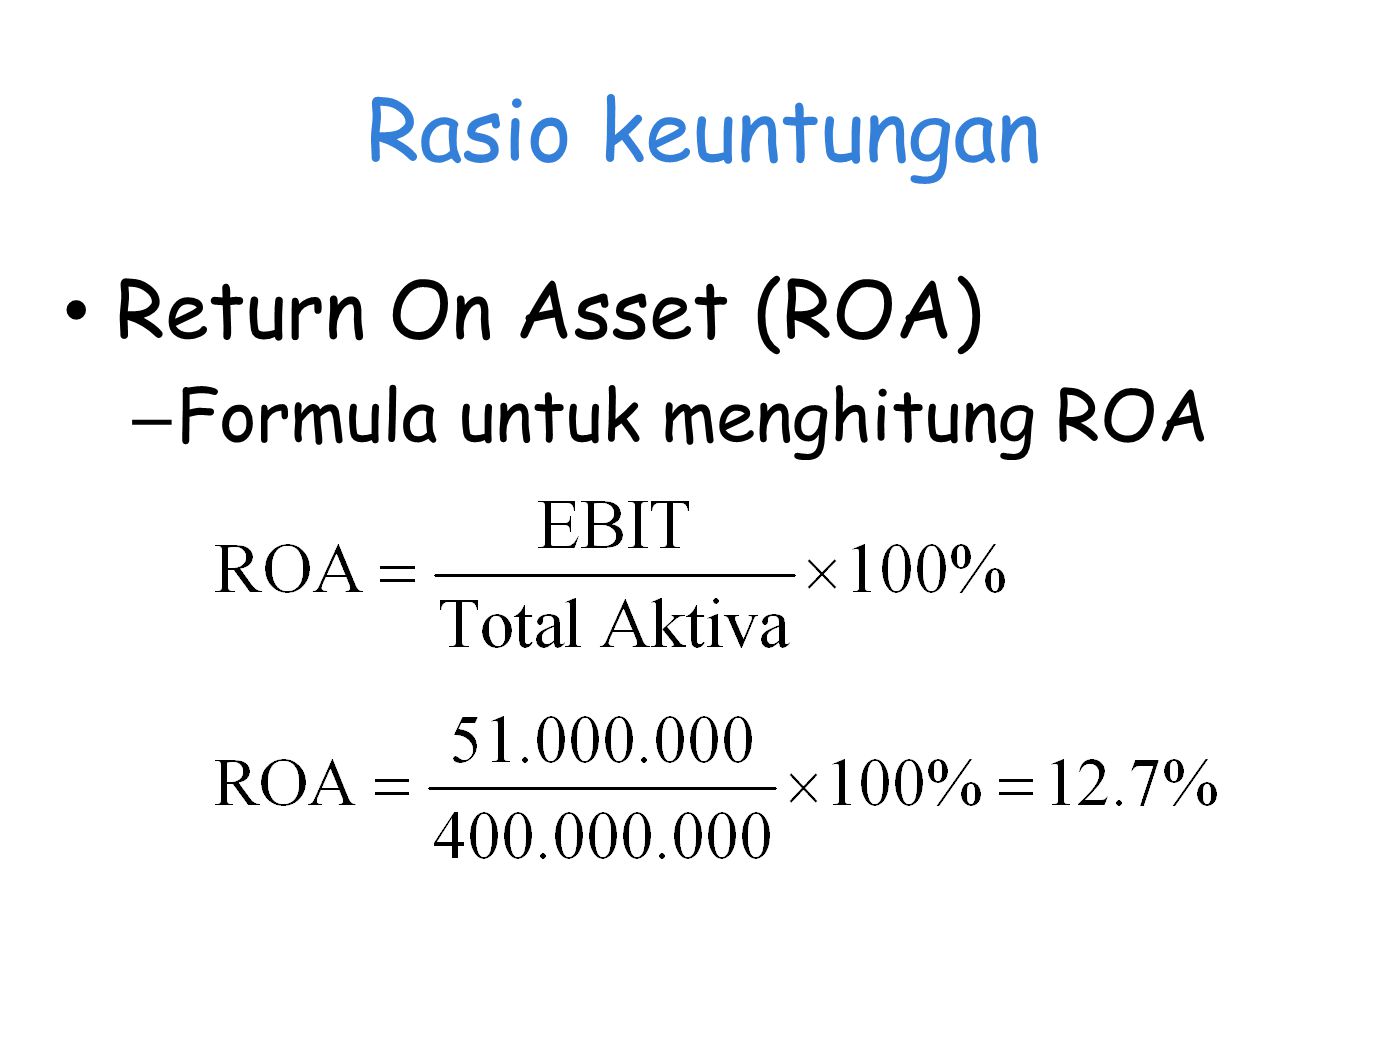 Rasio keuntungan Return On Asset (ROA) Formula untuk menghitung ROA